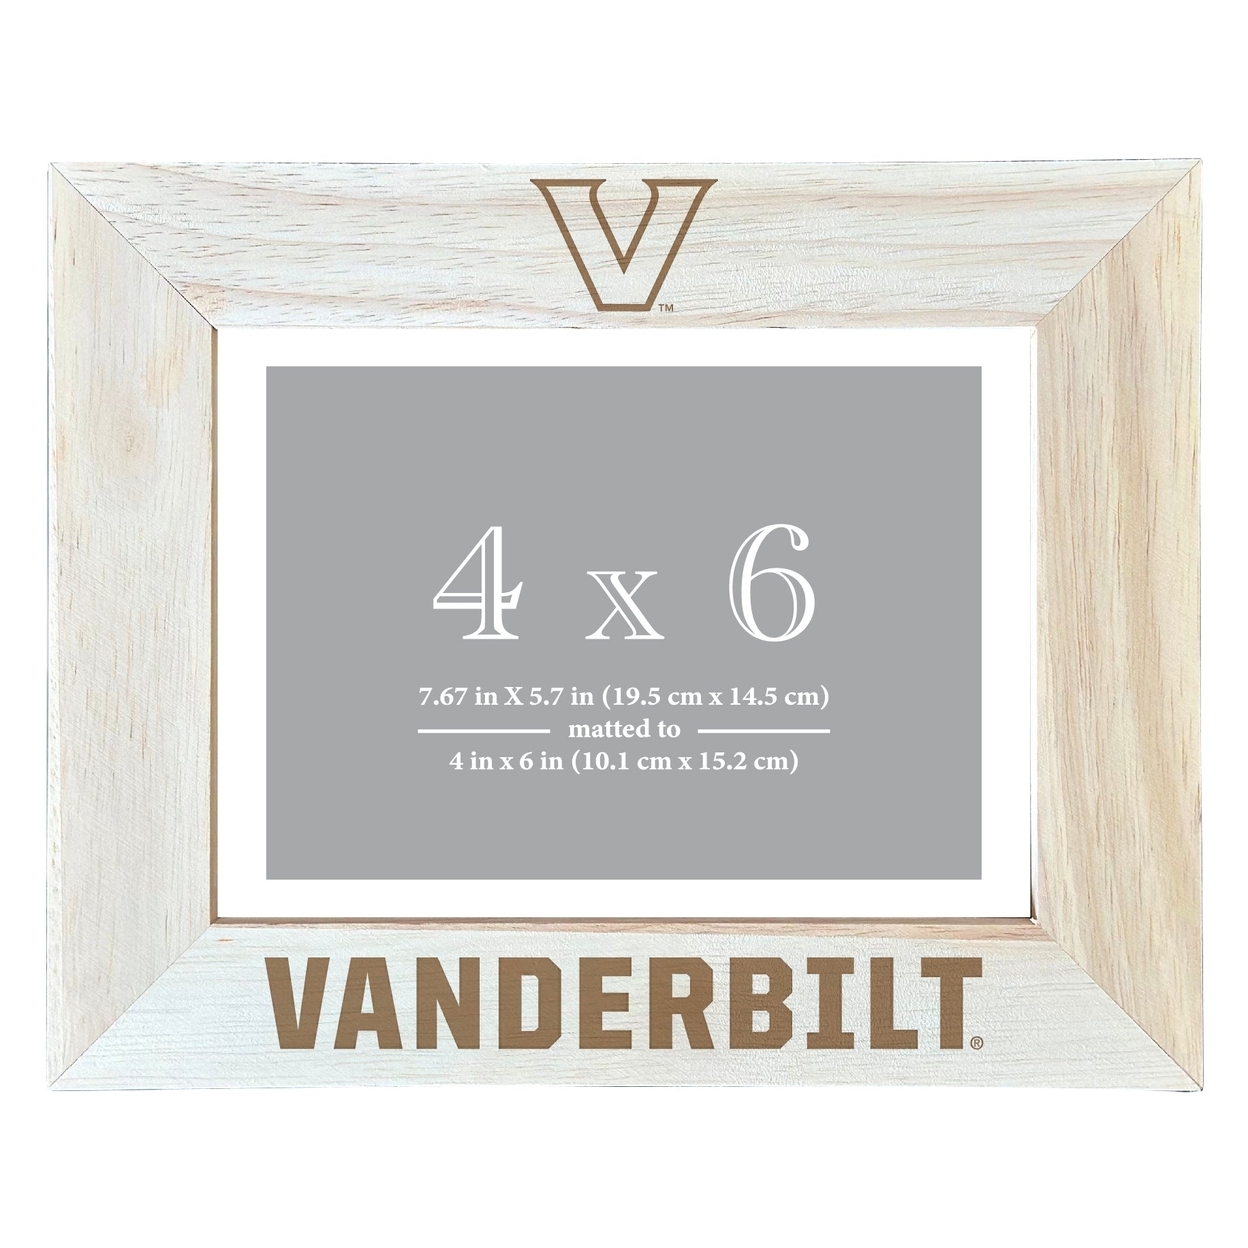 Vanderbilt University Wooden Photo Frame Matted To 4 X 6 Inch - Etched